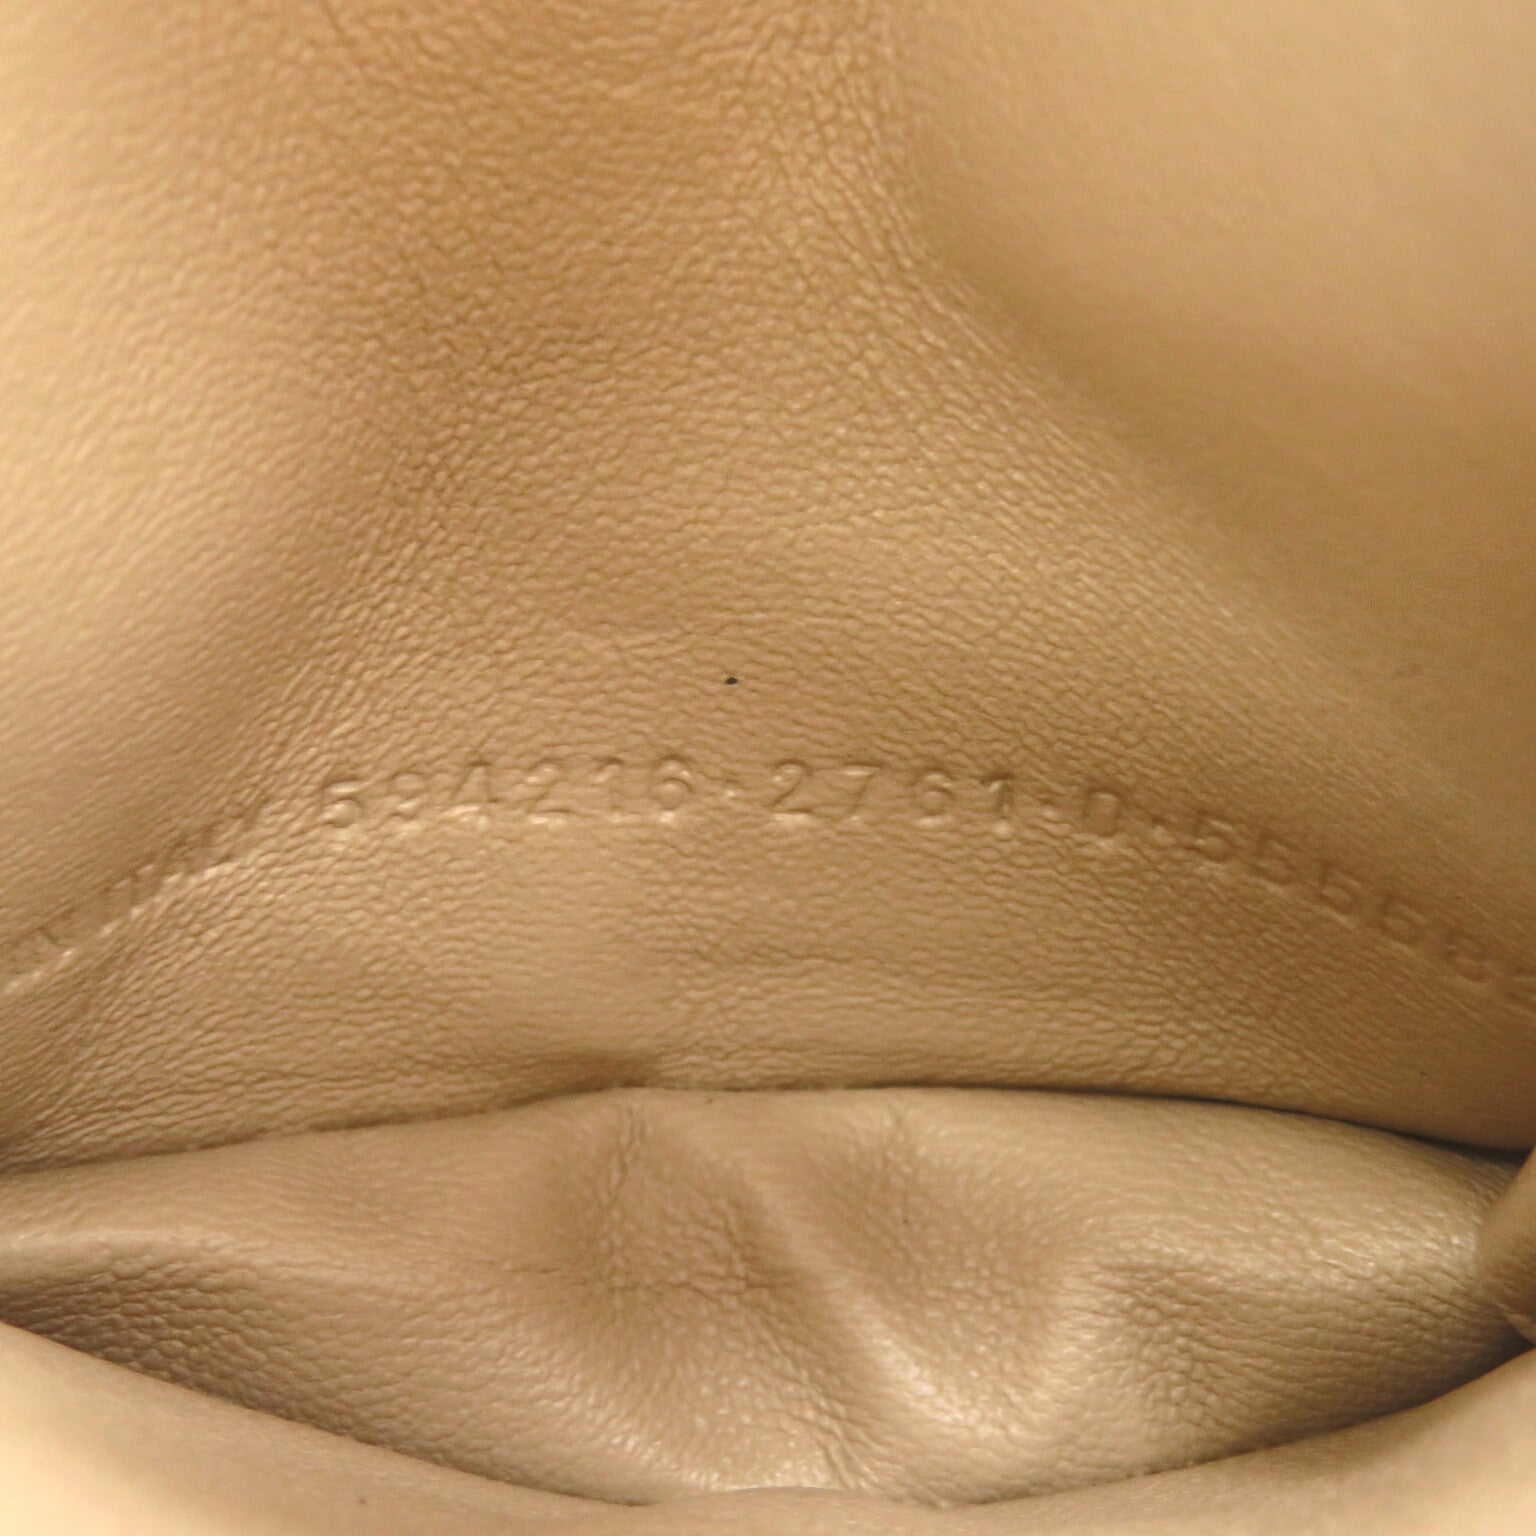 Balenciaga BALENCIAGA Double Fold Wallet Double Folded Wallet Leather  Beige 5942161IZI32761